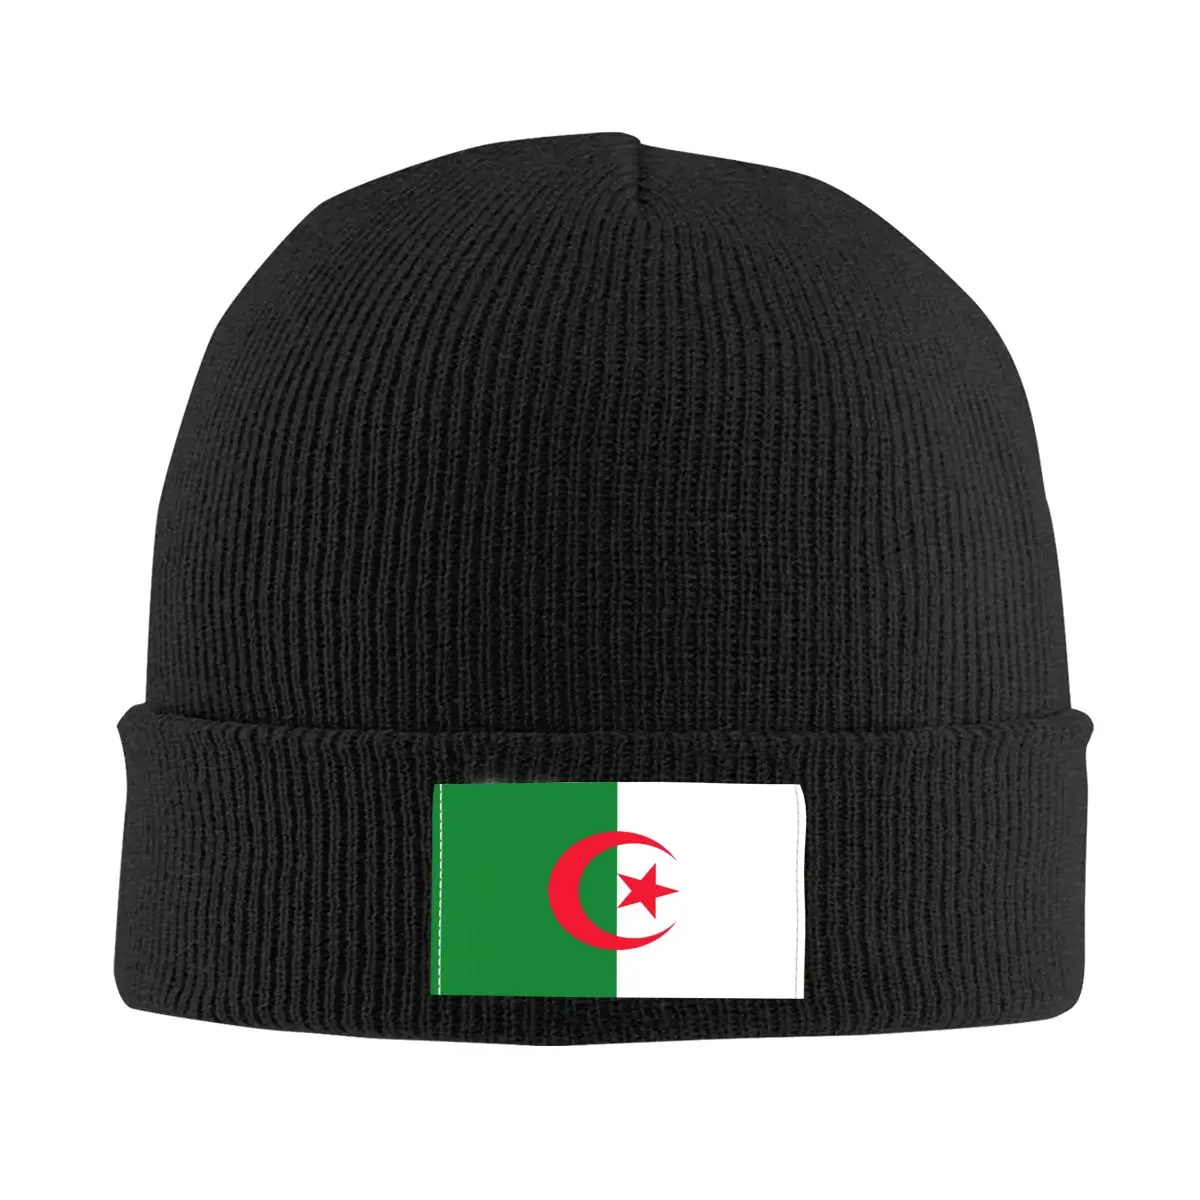 Algeria Flag Skullies Beanies Caps Men Women Unisex Hip Hop Winter Warm Knit Hat Adult Printed Bonnet Hats 1